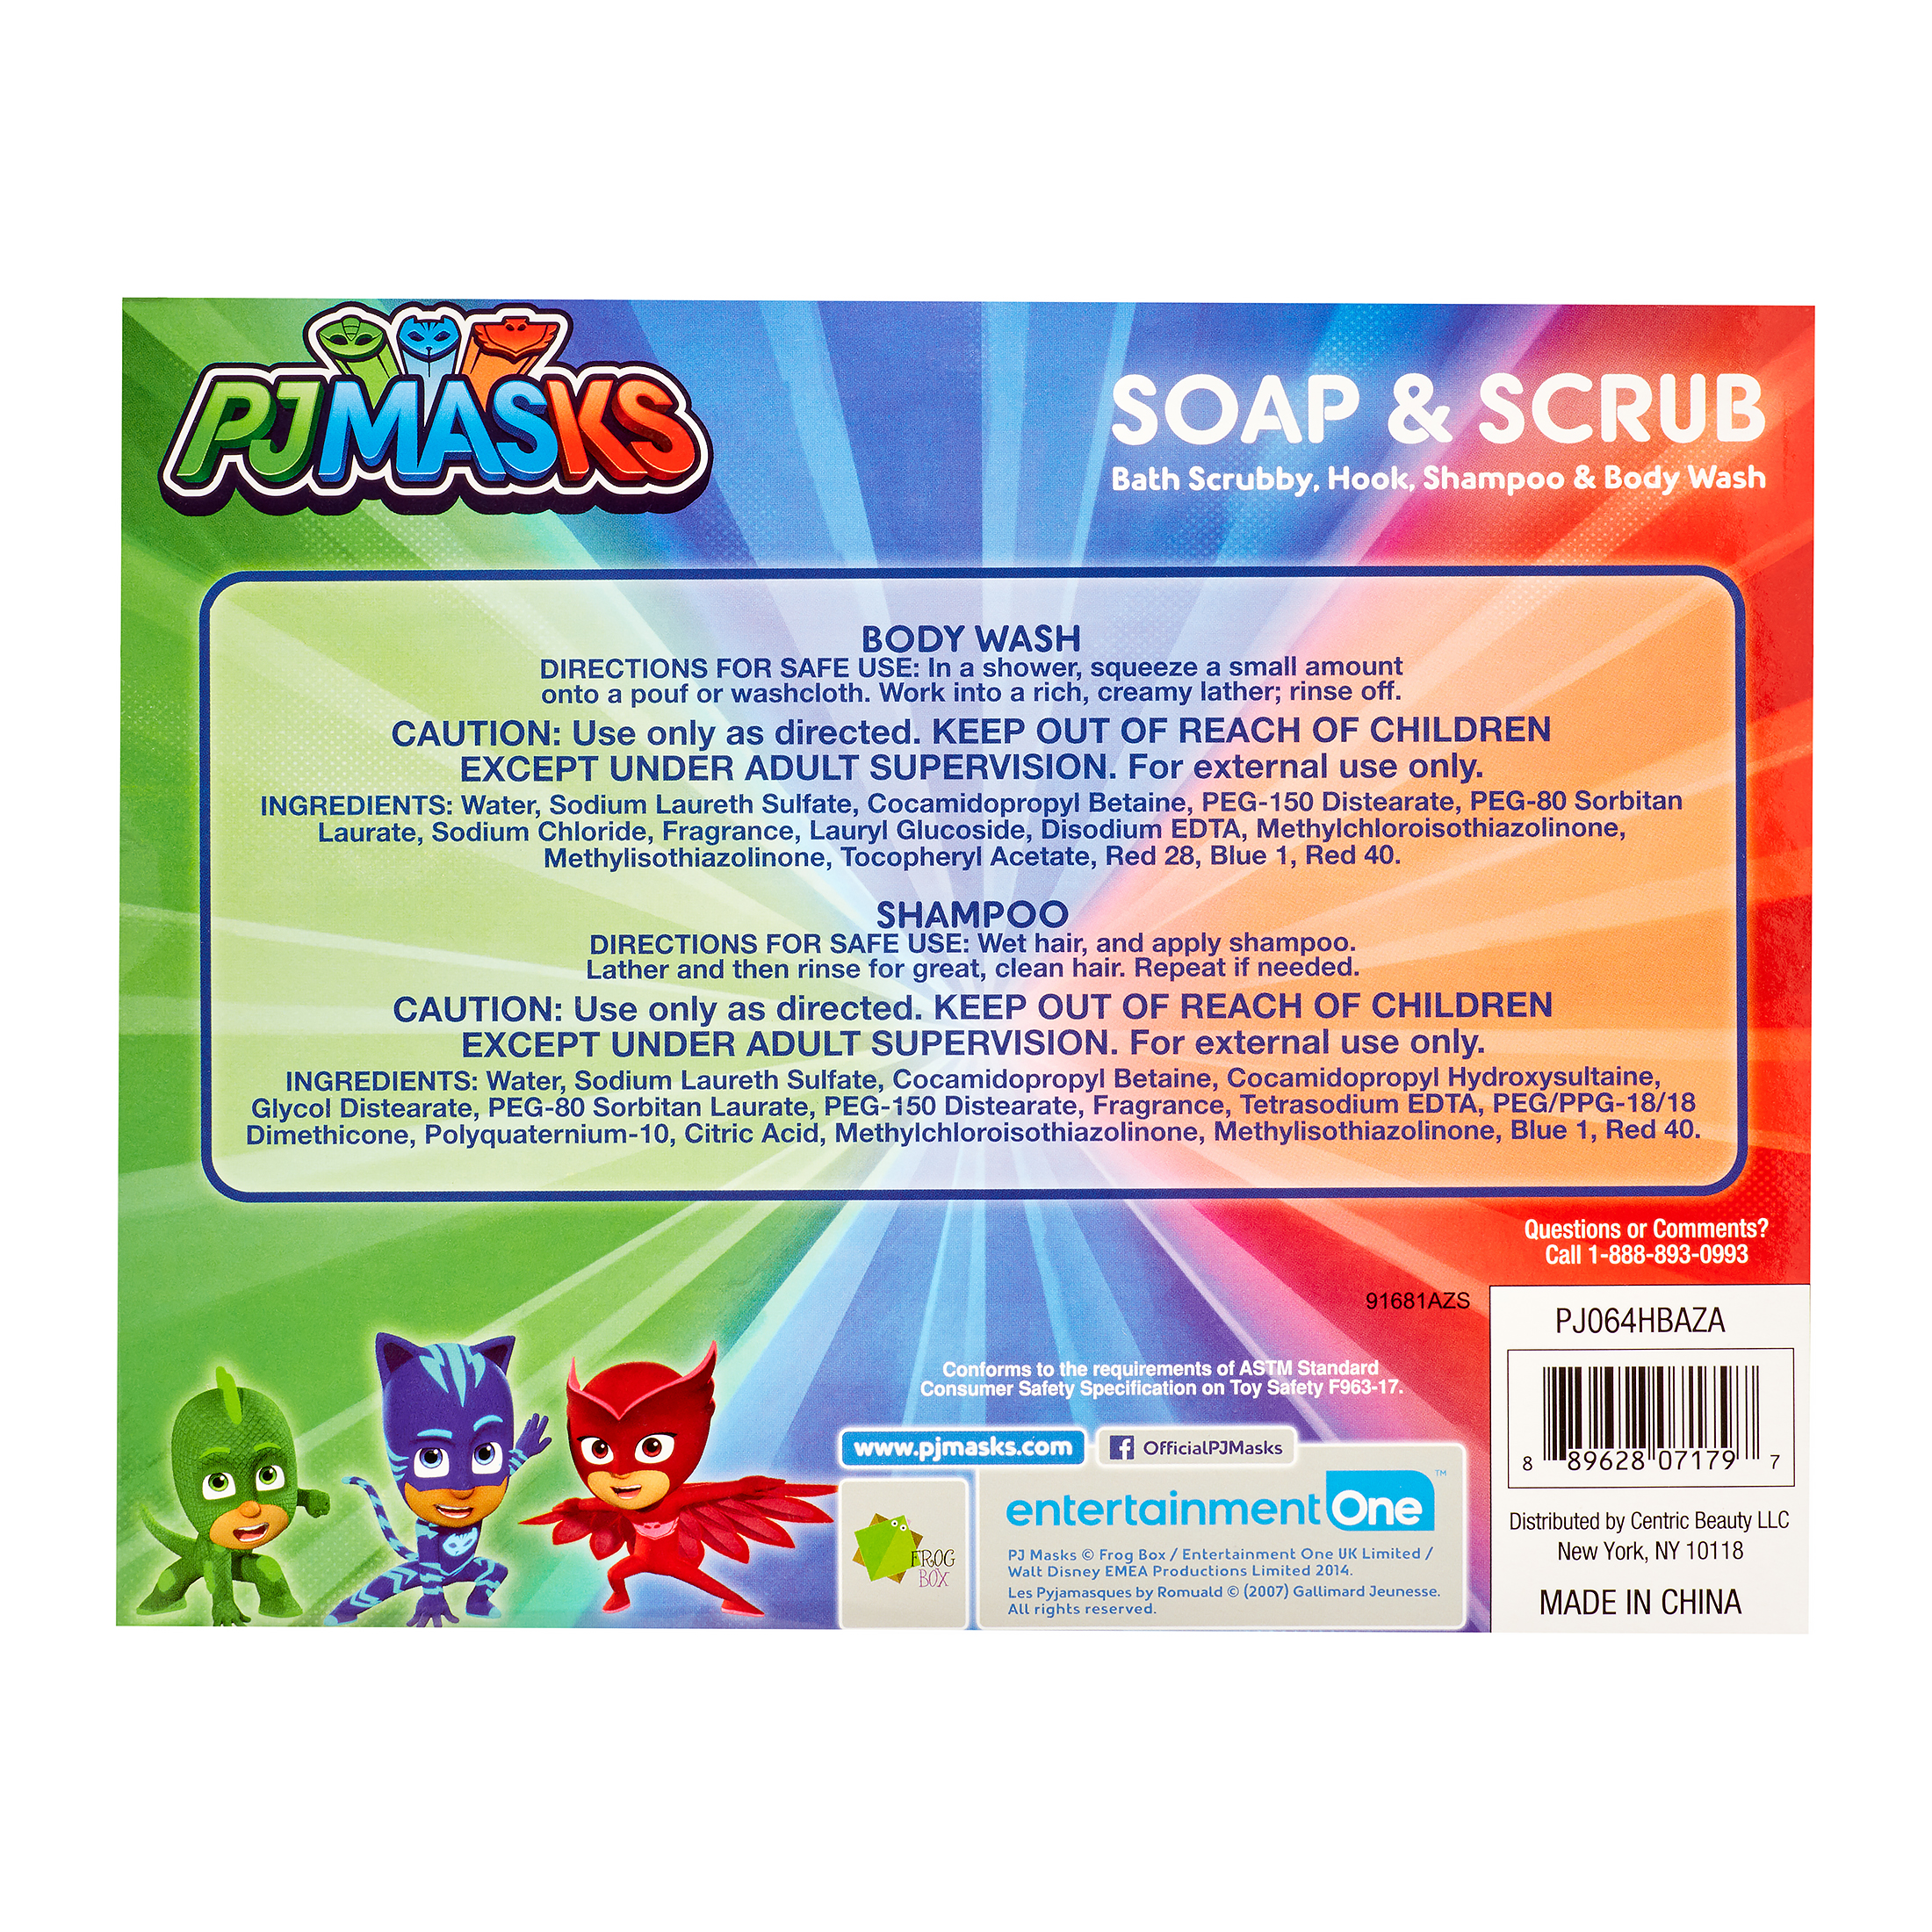 PJ Masks 4-Piece Soap and Scrub Body Wash and Shampoo Set - image 4 of 5